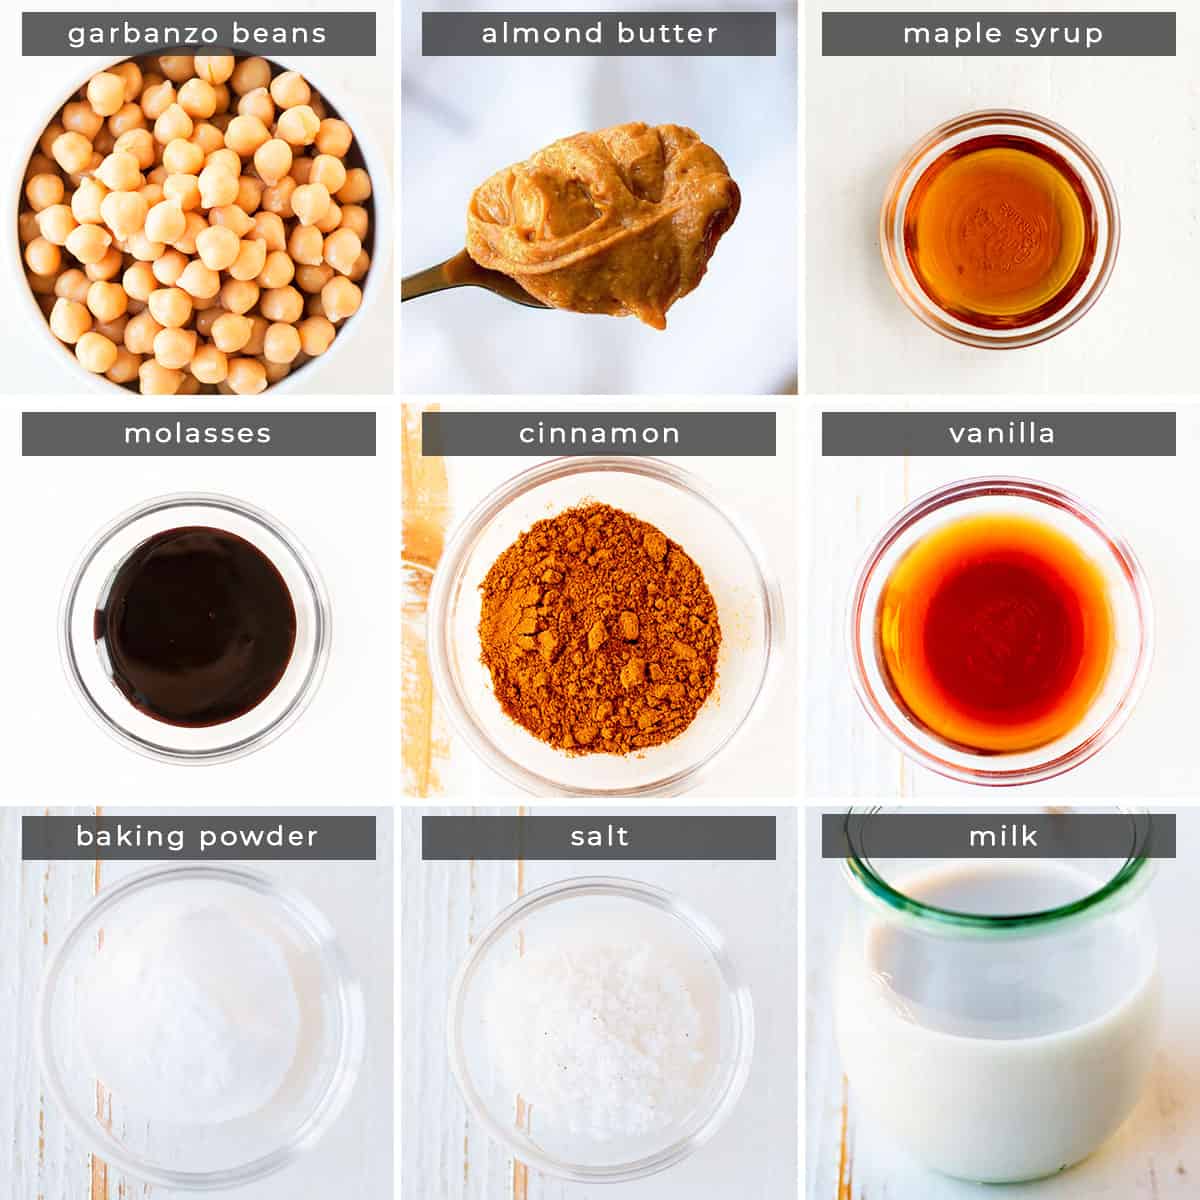 Image containing recipe ingredients, garbanzo beans, almond butter, maple syrup, molasses, cinnamon, vanilla, baking powder, salt, milk.